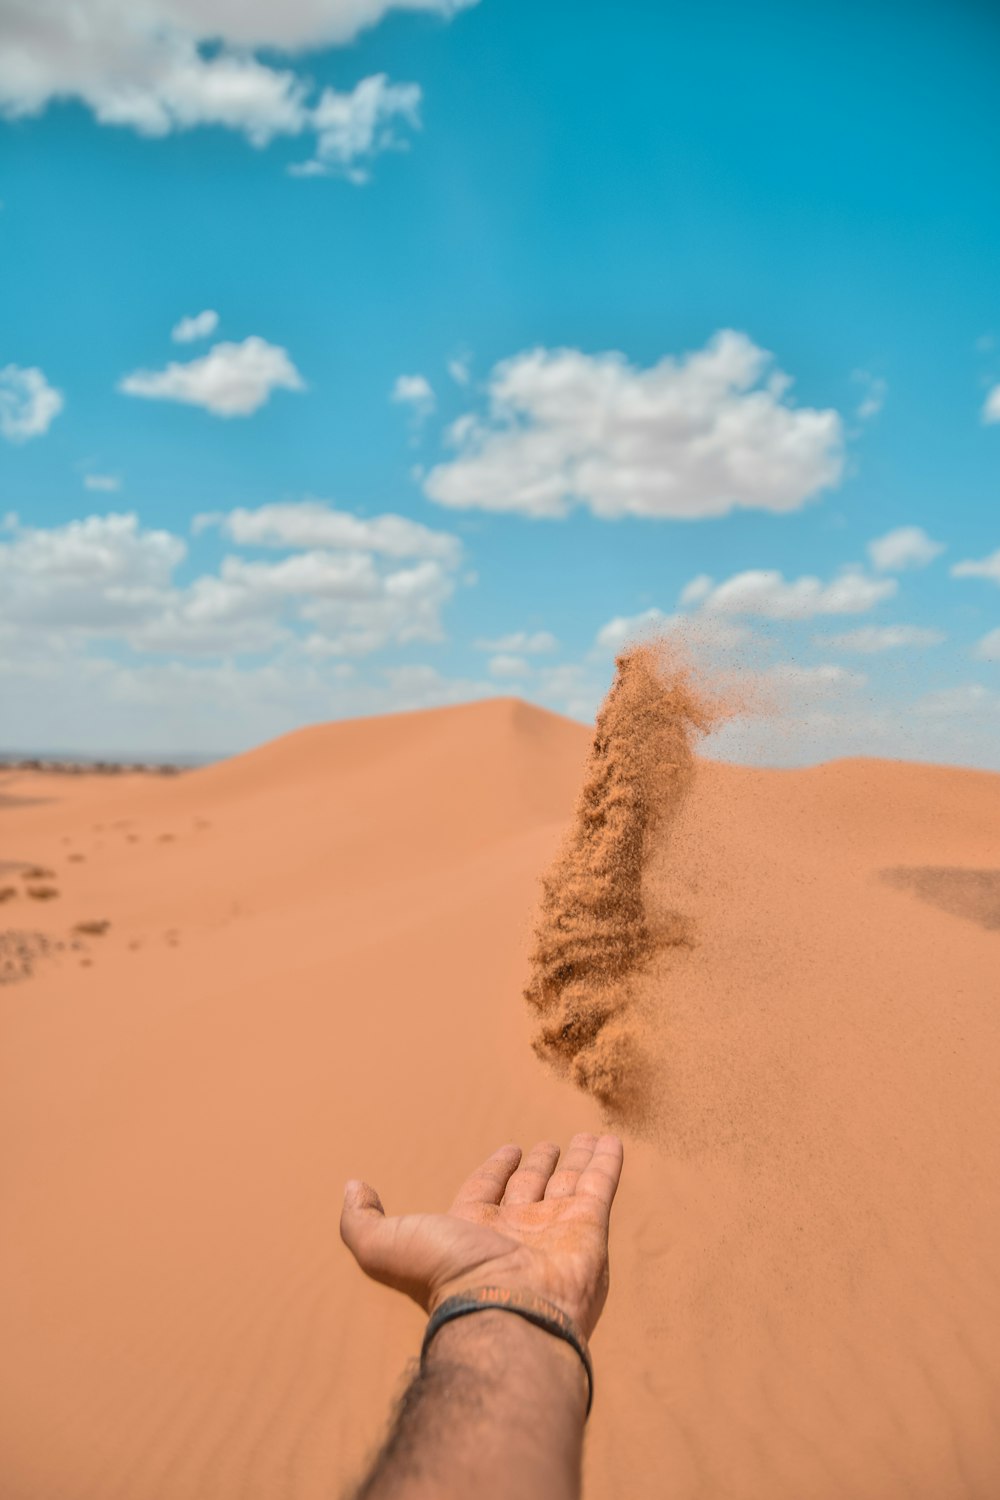 person throwing sand on desert sand dune